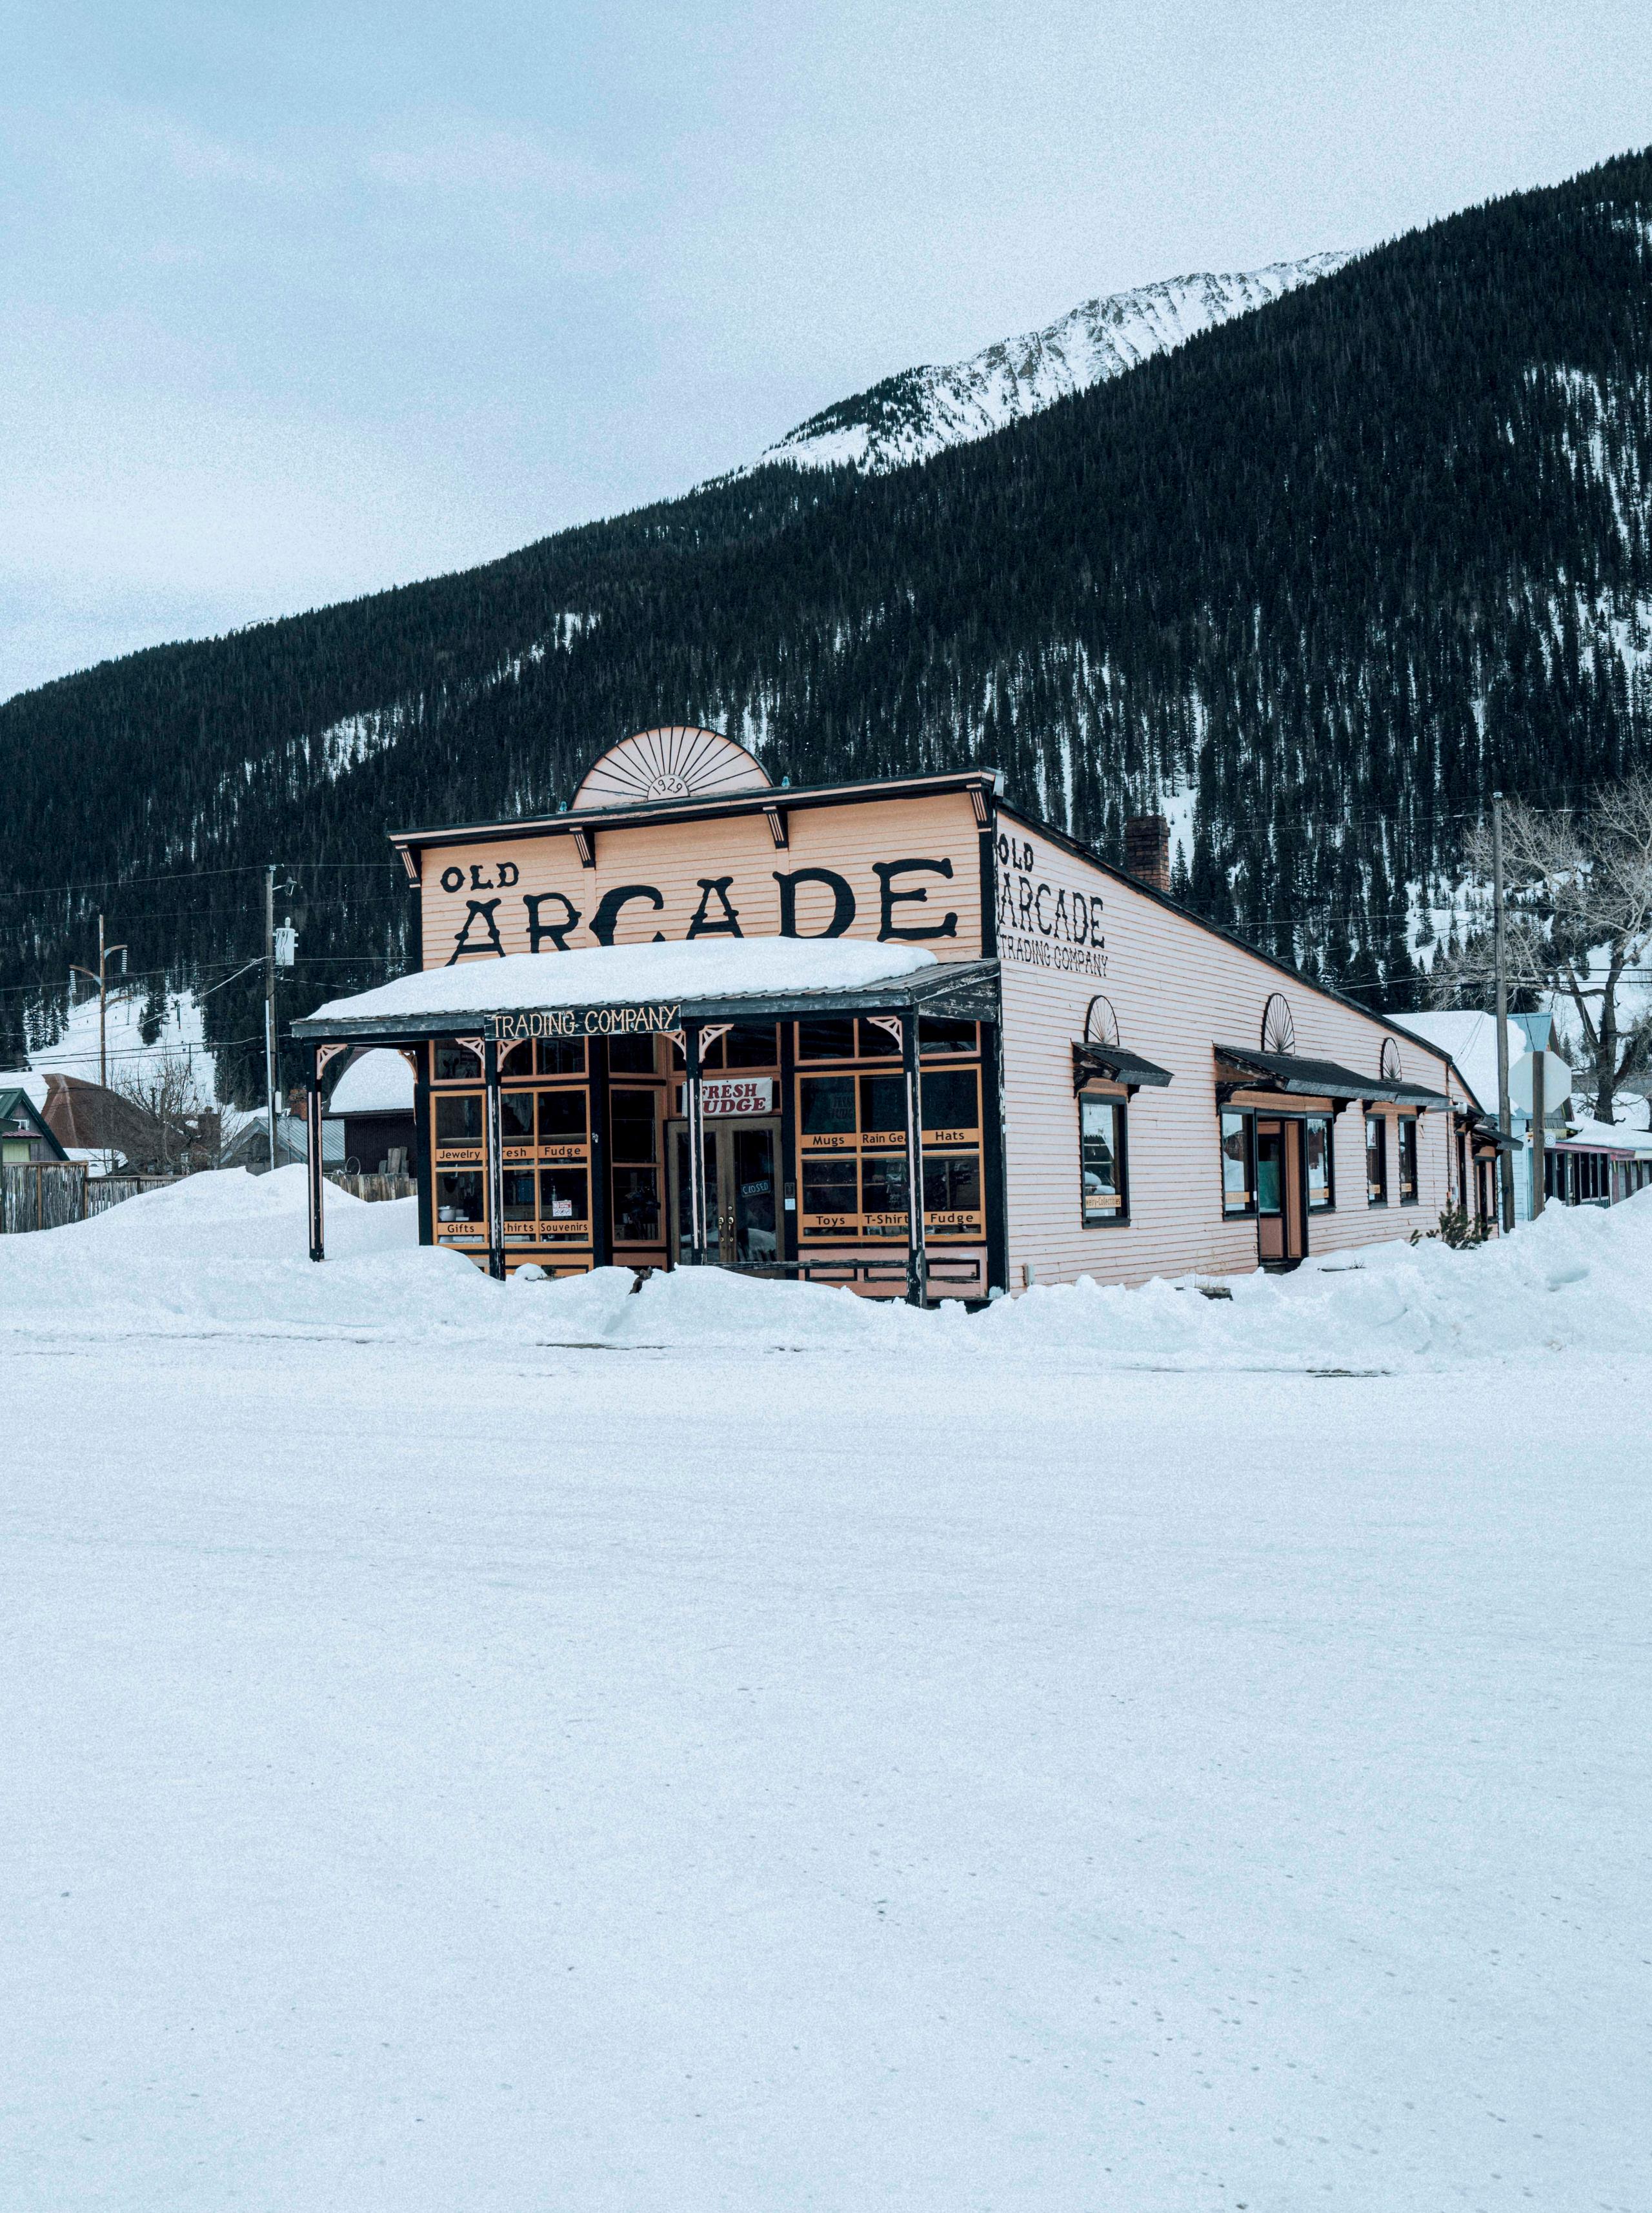 View of local arcade establishment in downtown Silverton, Colorado during the winter